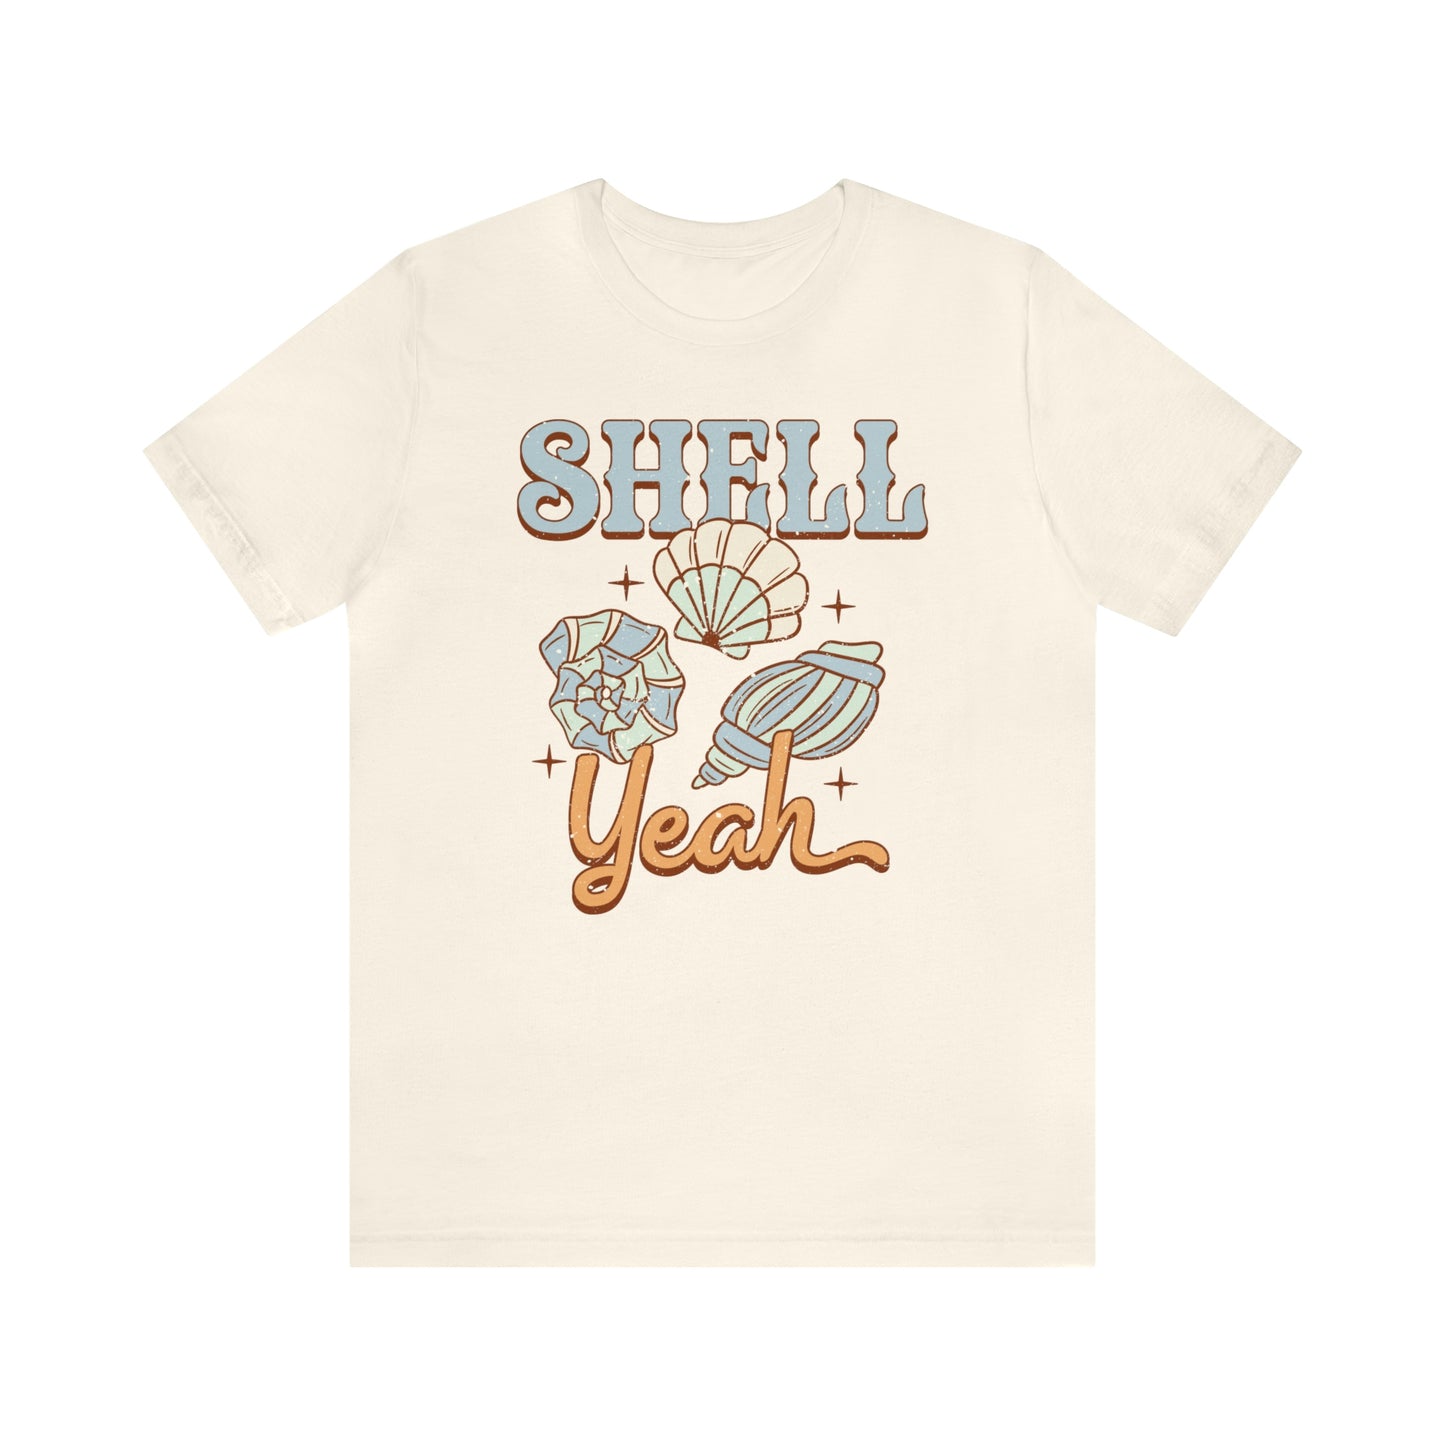 "Shell Yeah" Bella Canvas Short Sleeve Tee